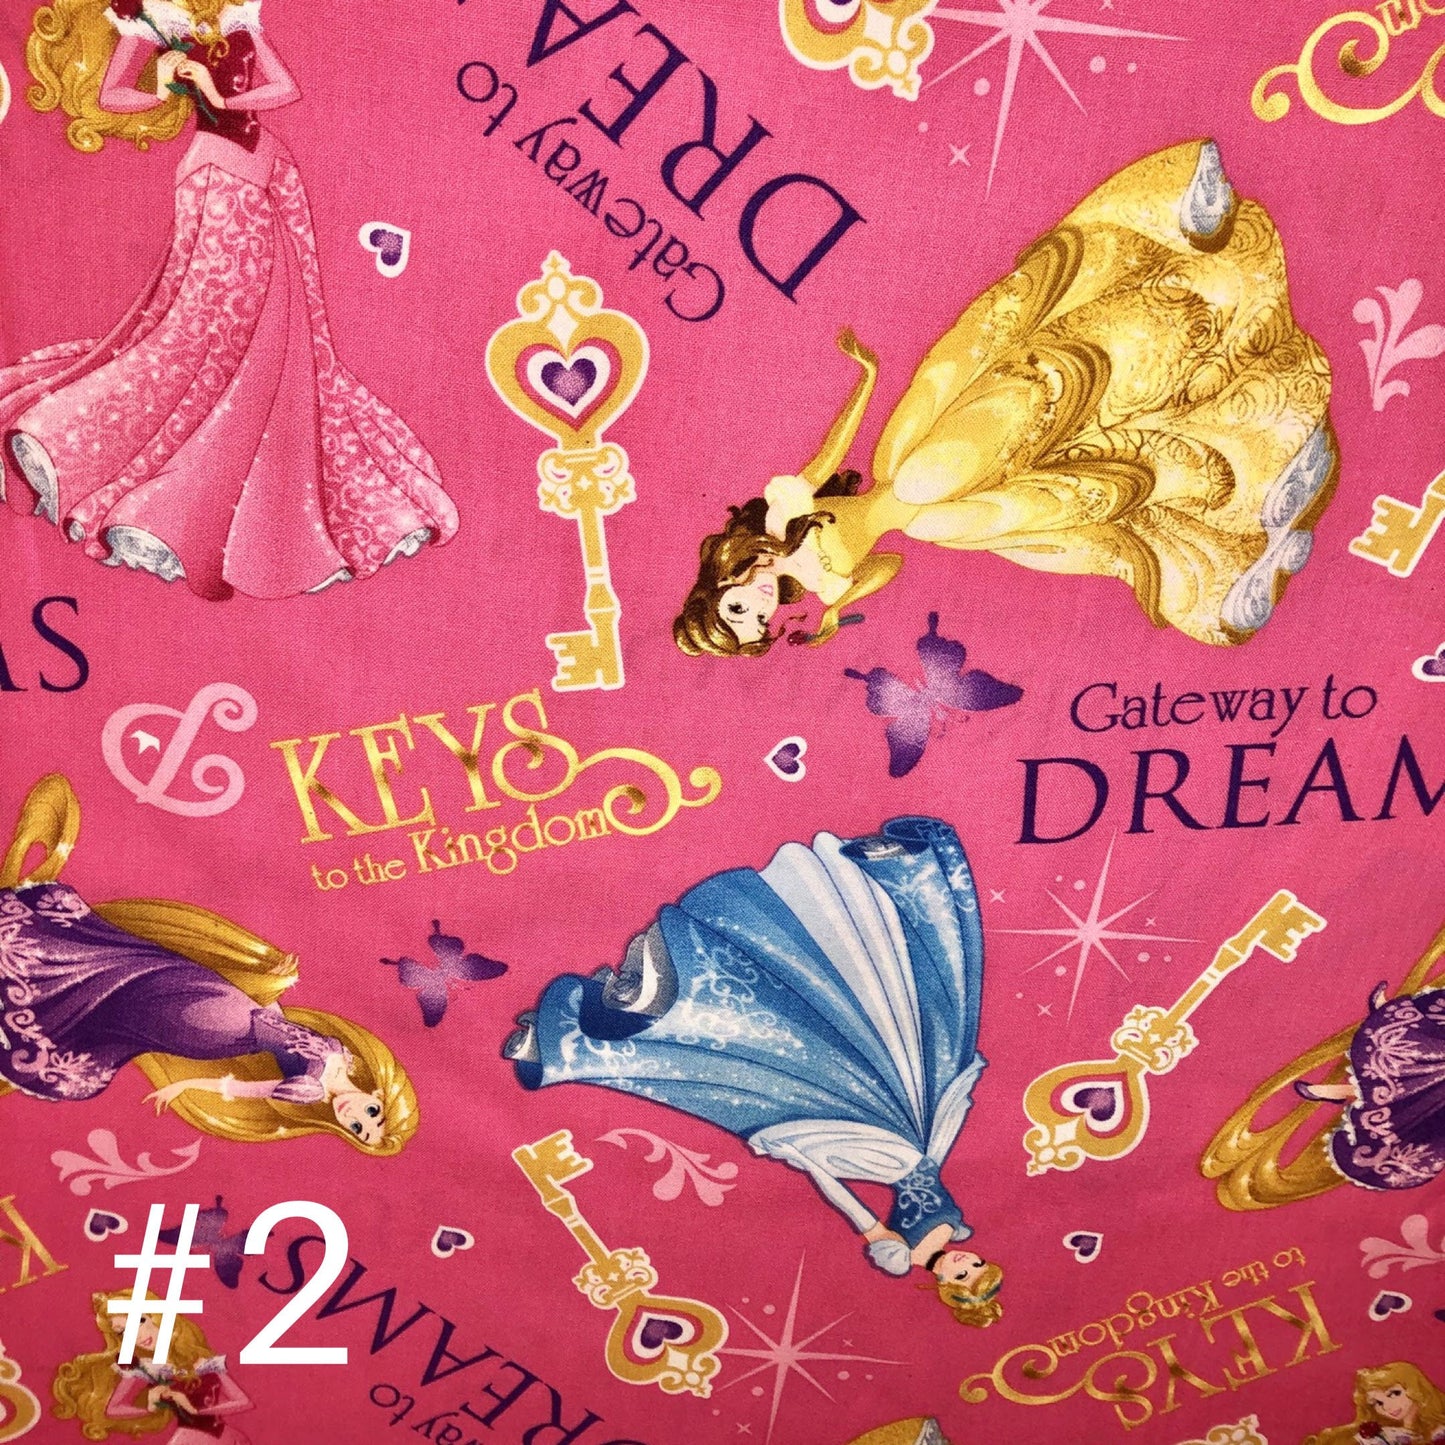 Licensed Prints - Disney Princesses (3 Patterns): Rectangle Adult Face Masks (One Size Fits Most; Ages 11+)